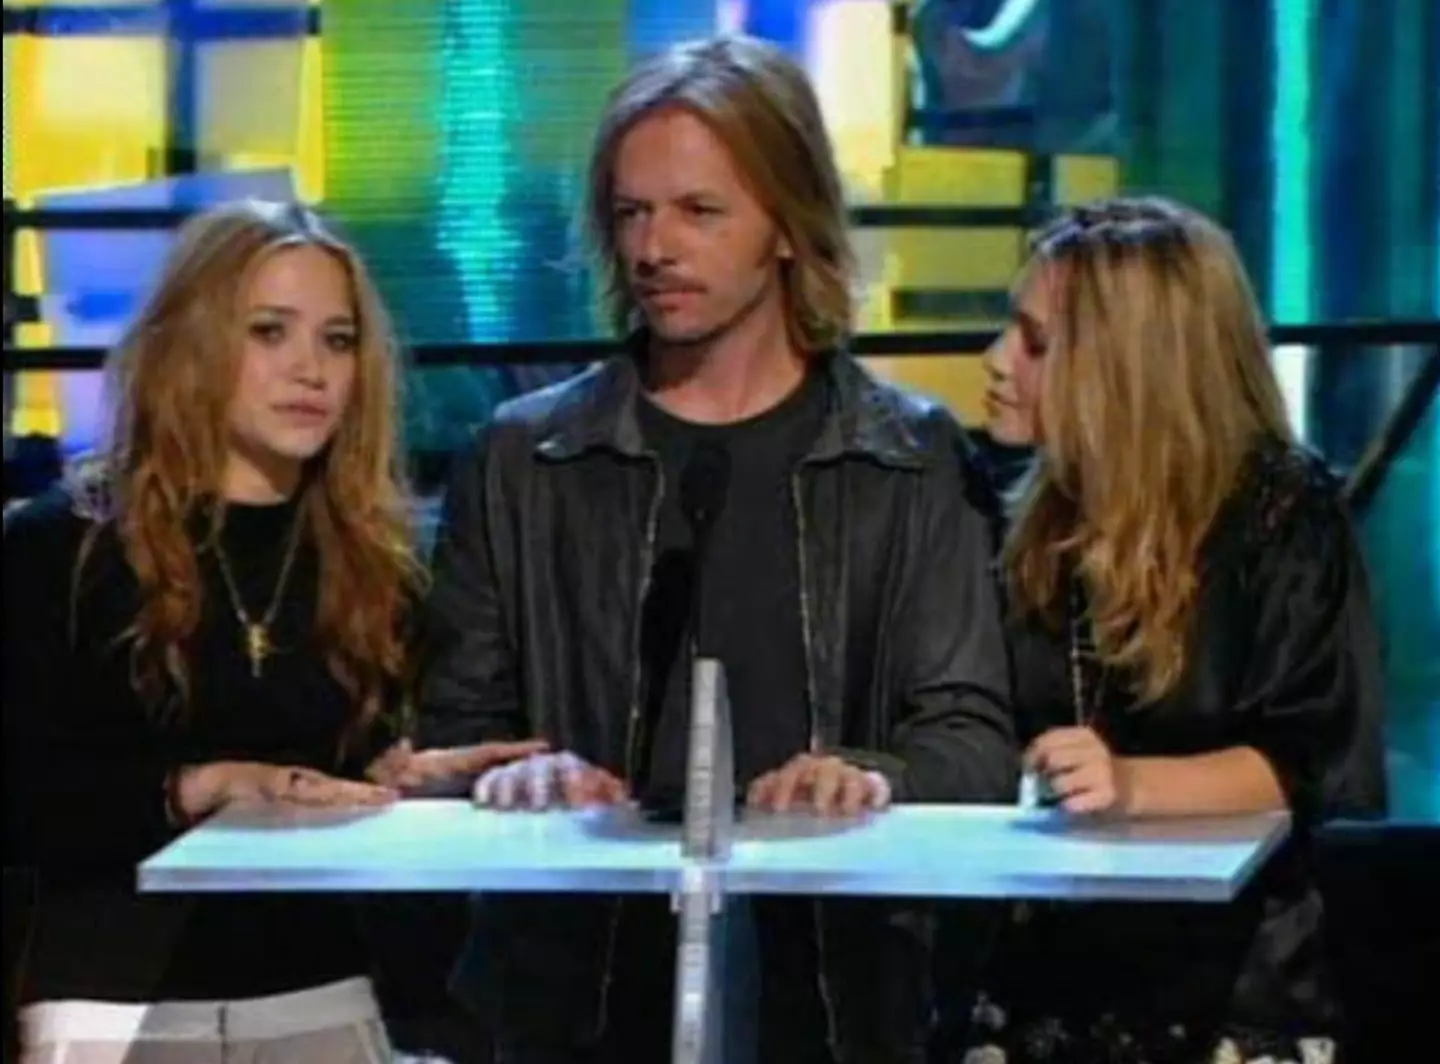 Shortly after, the twins present the MTV award alongside David Spade.